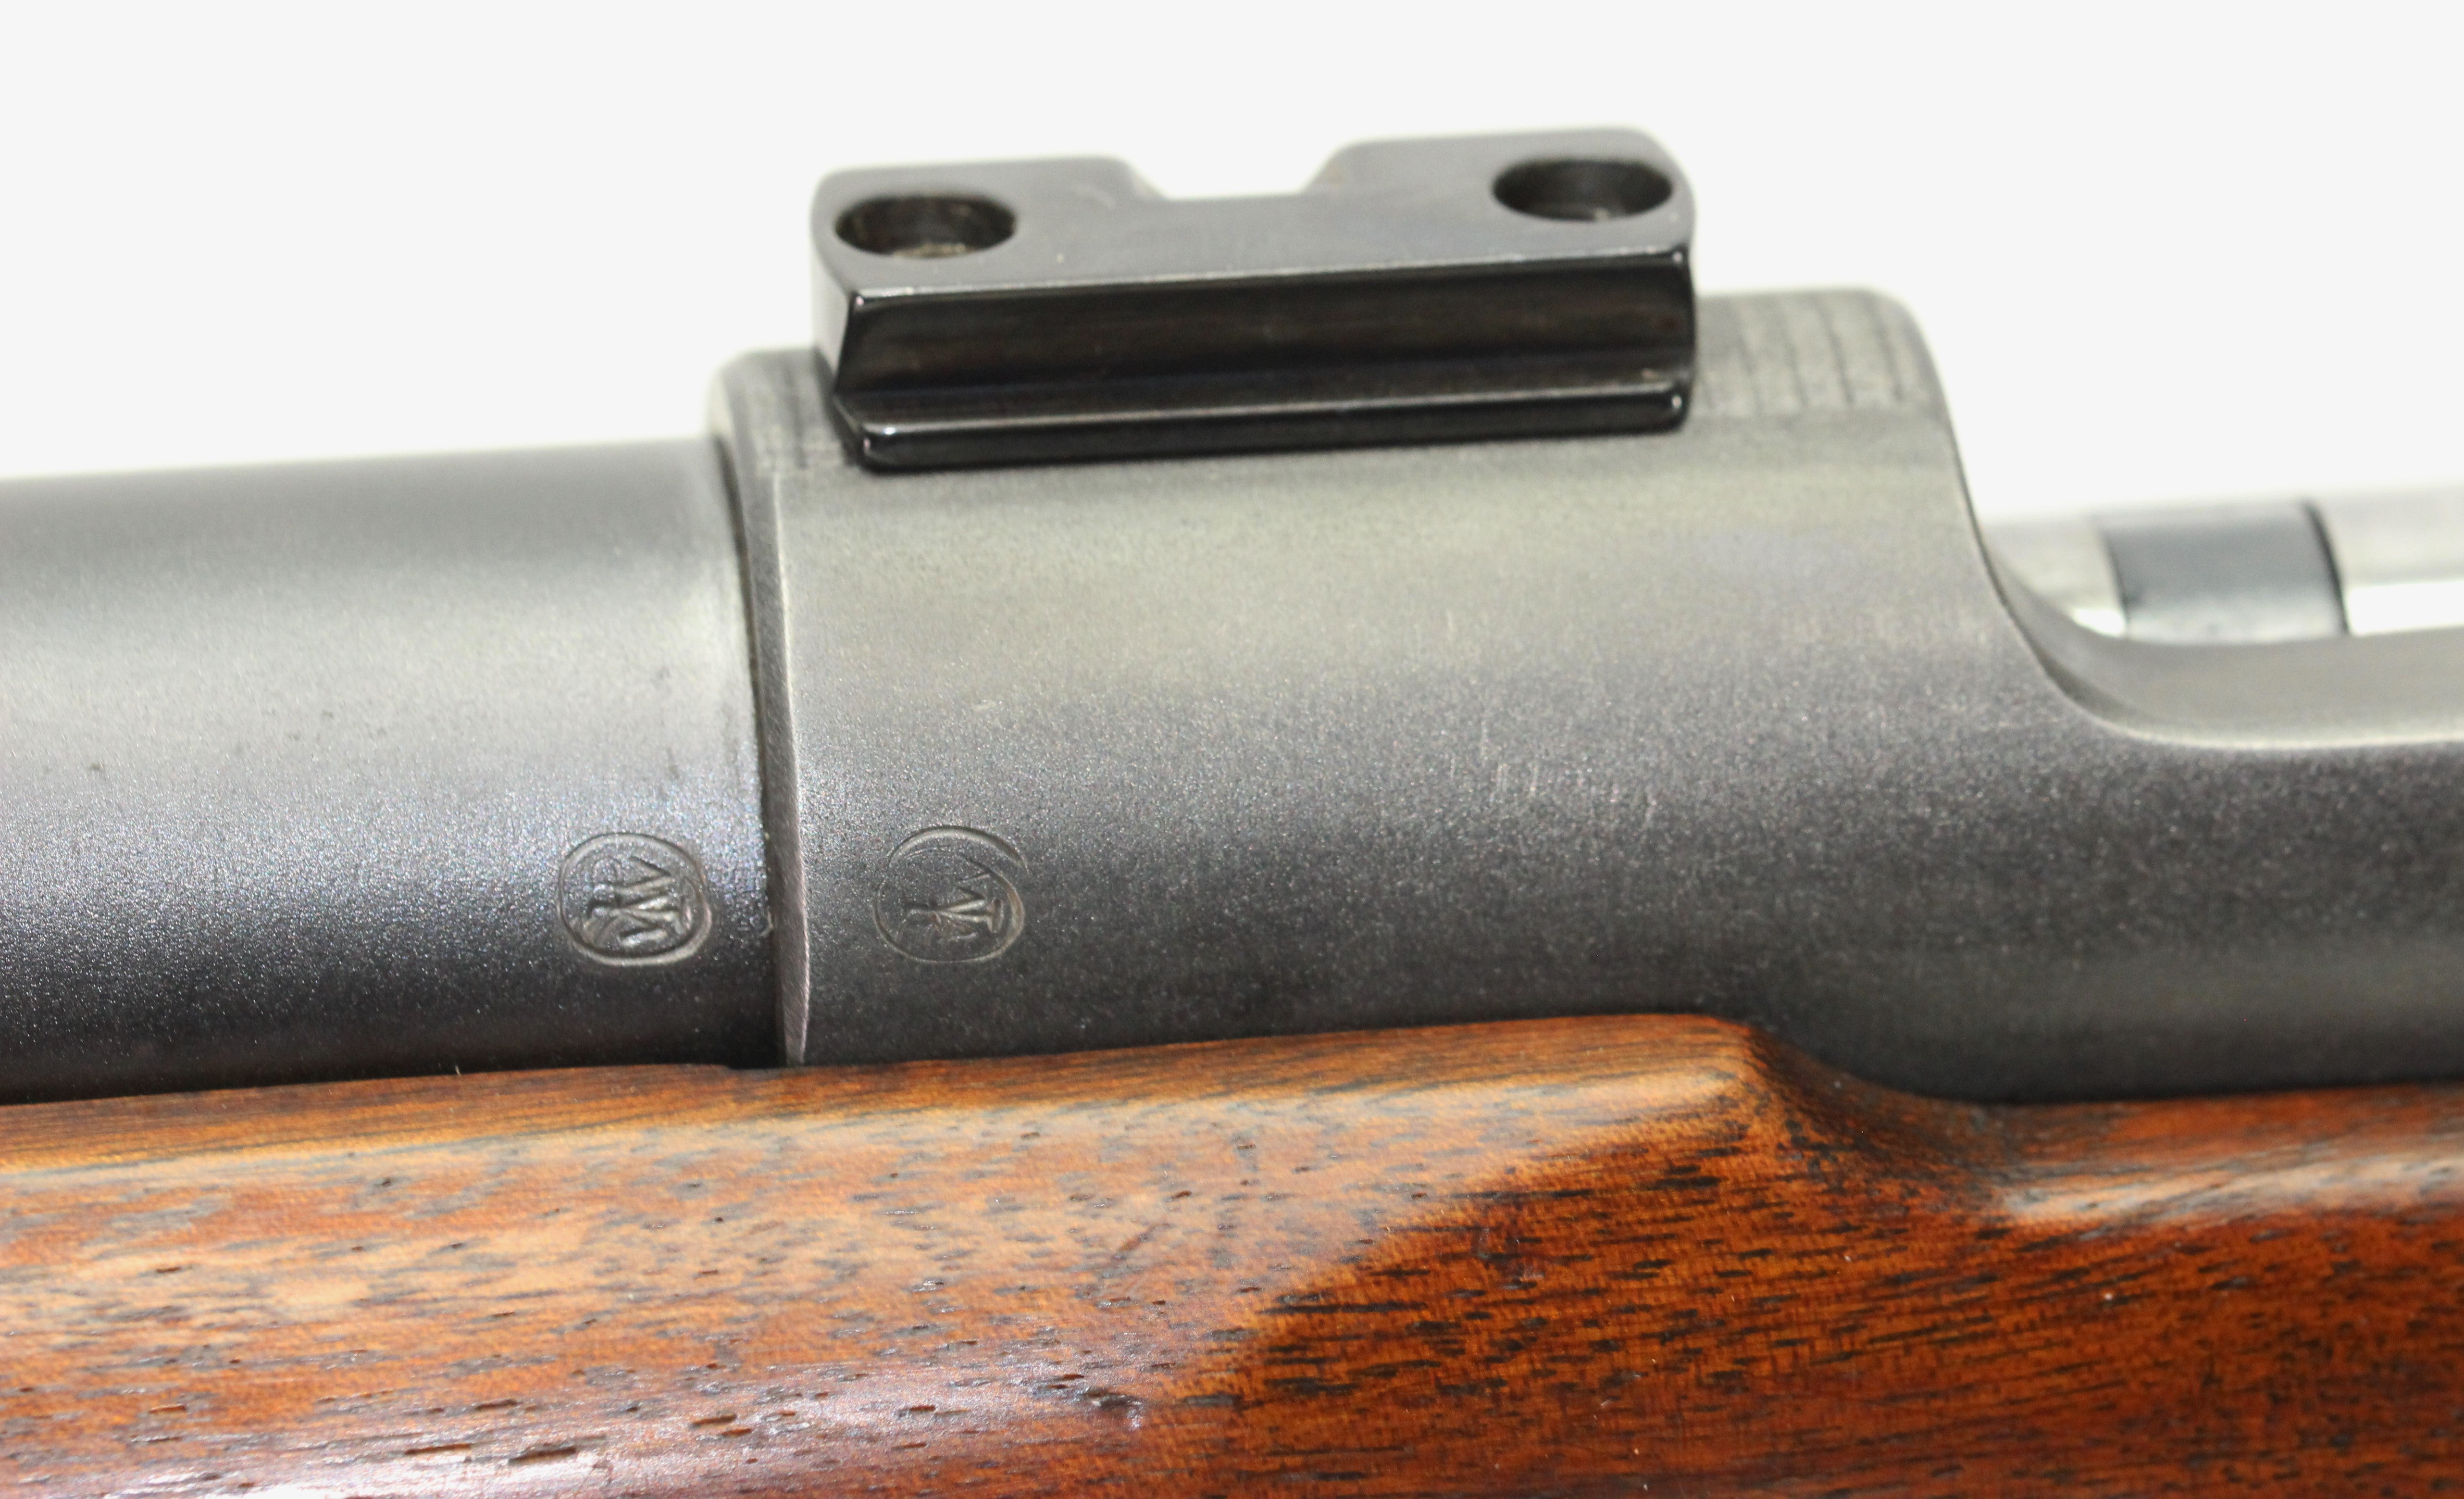 .220 Swift Target Rifle - 1948